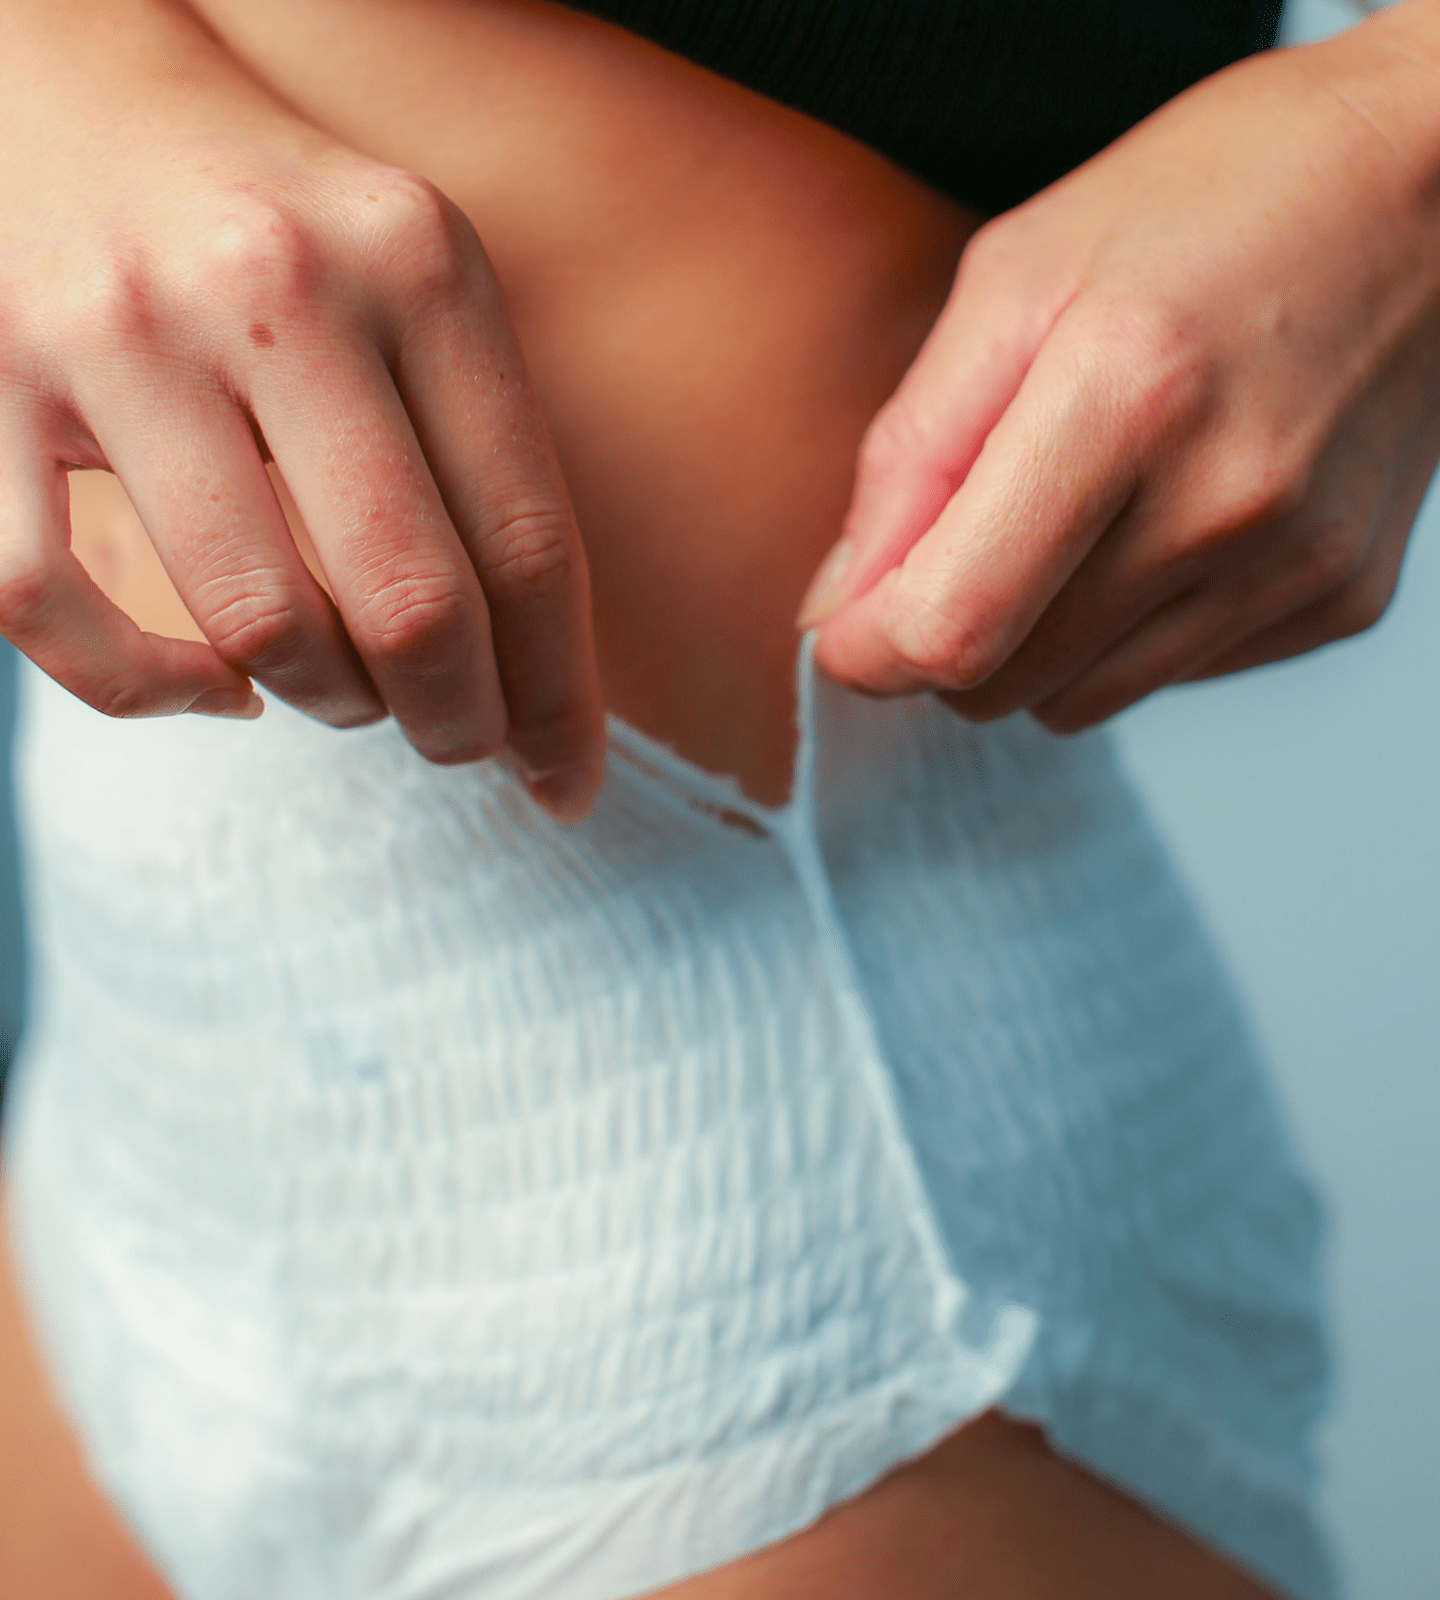 Postpartum Disposable Absorbent Underwear - Brolly Sheets NZ